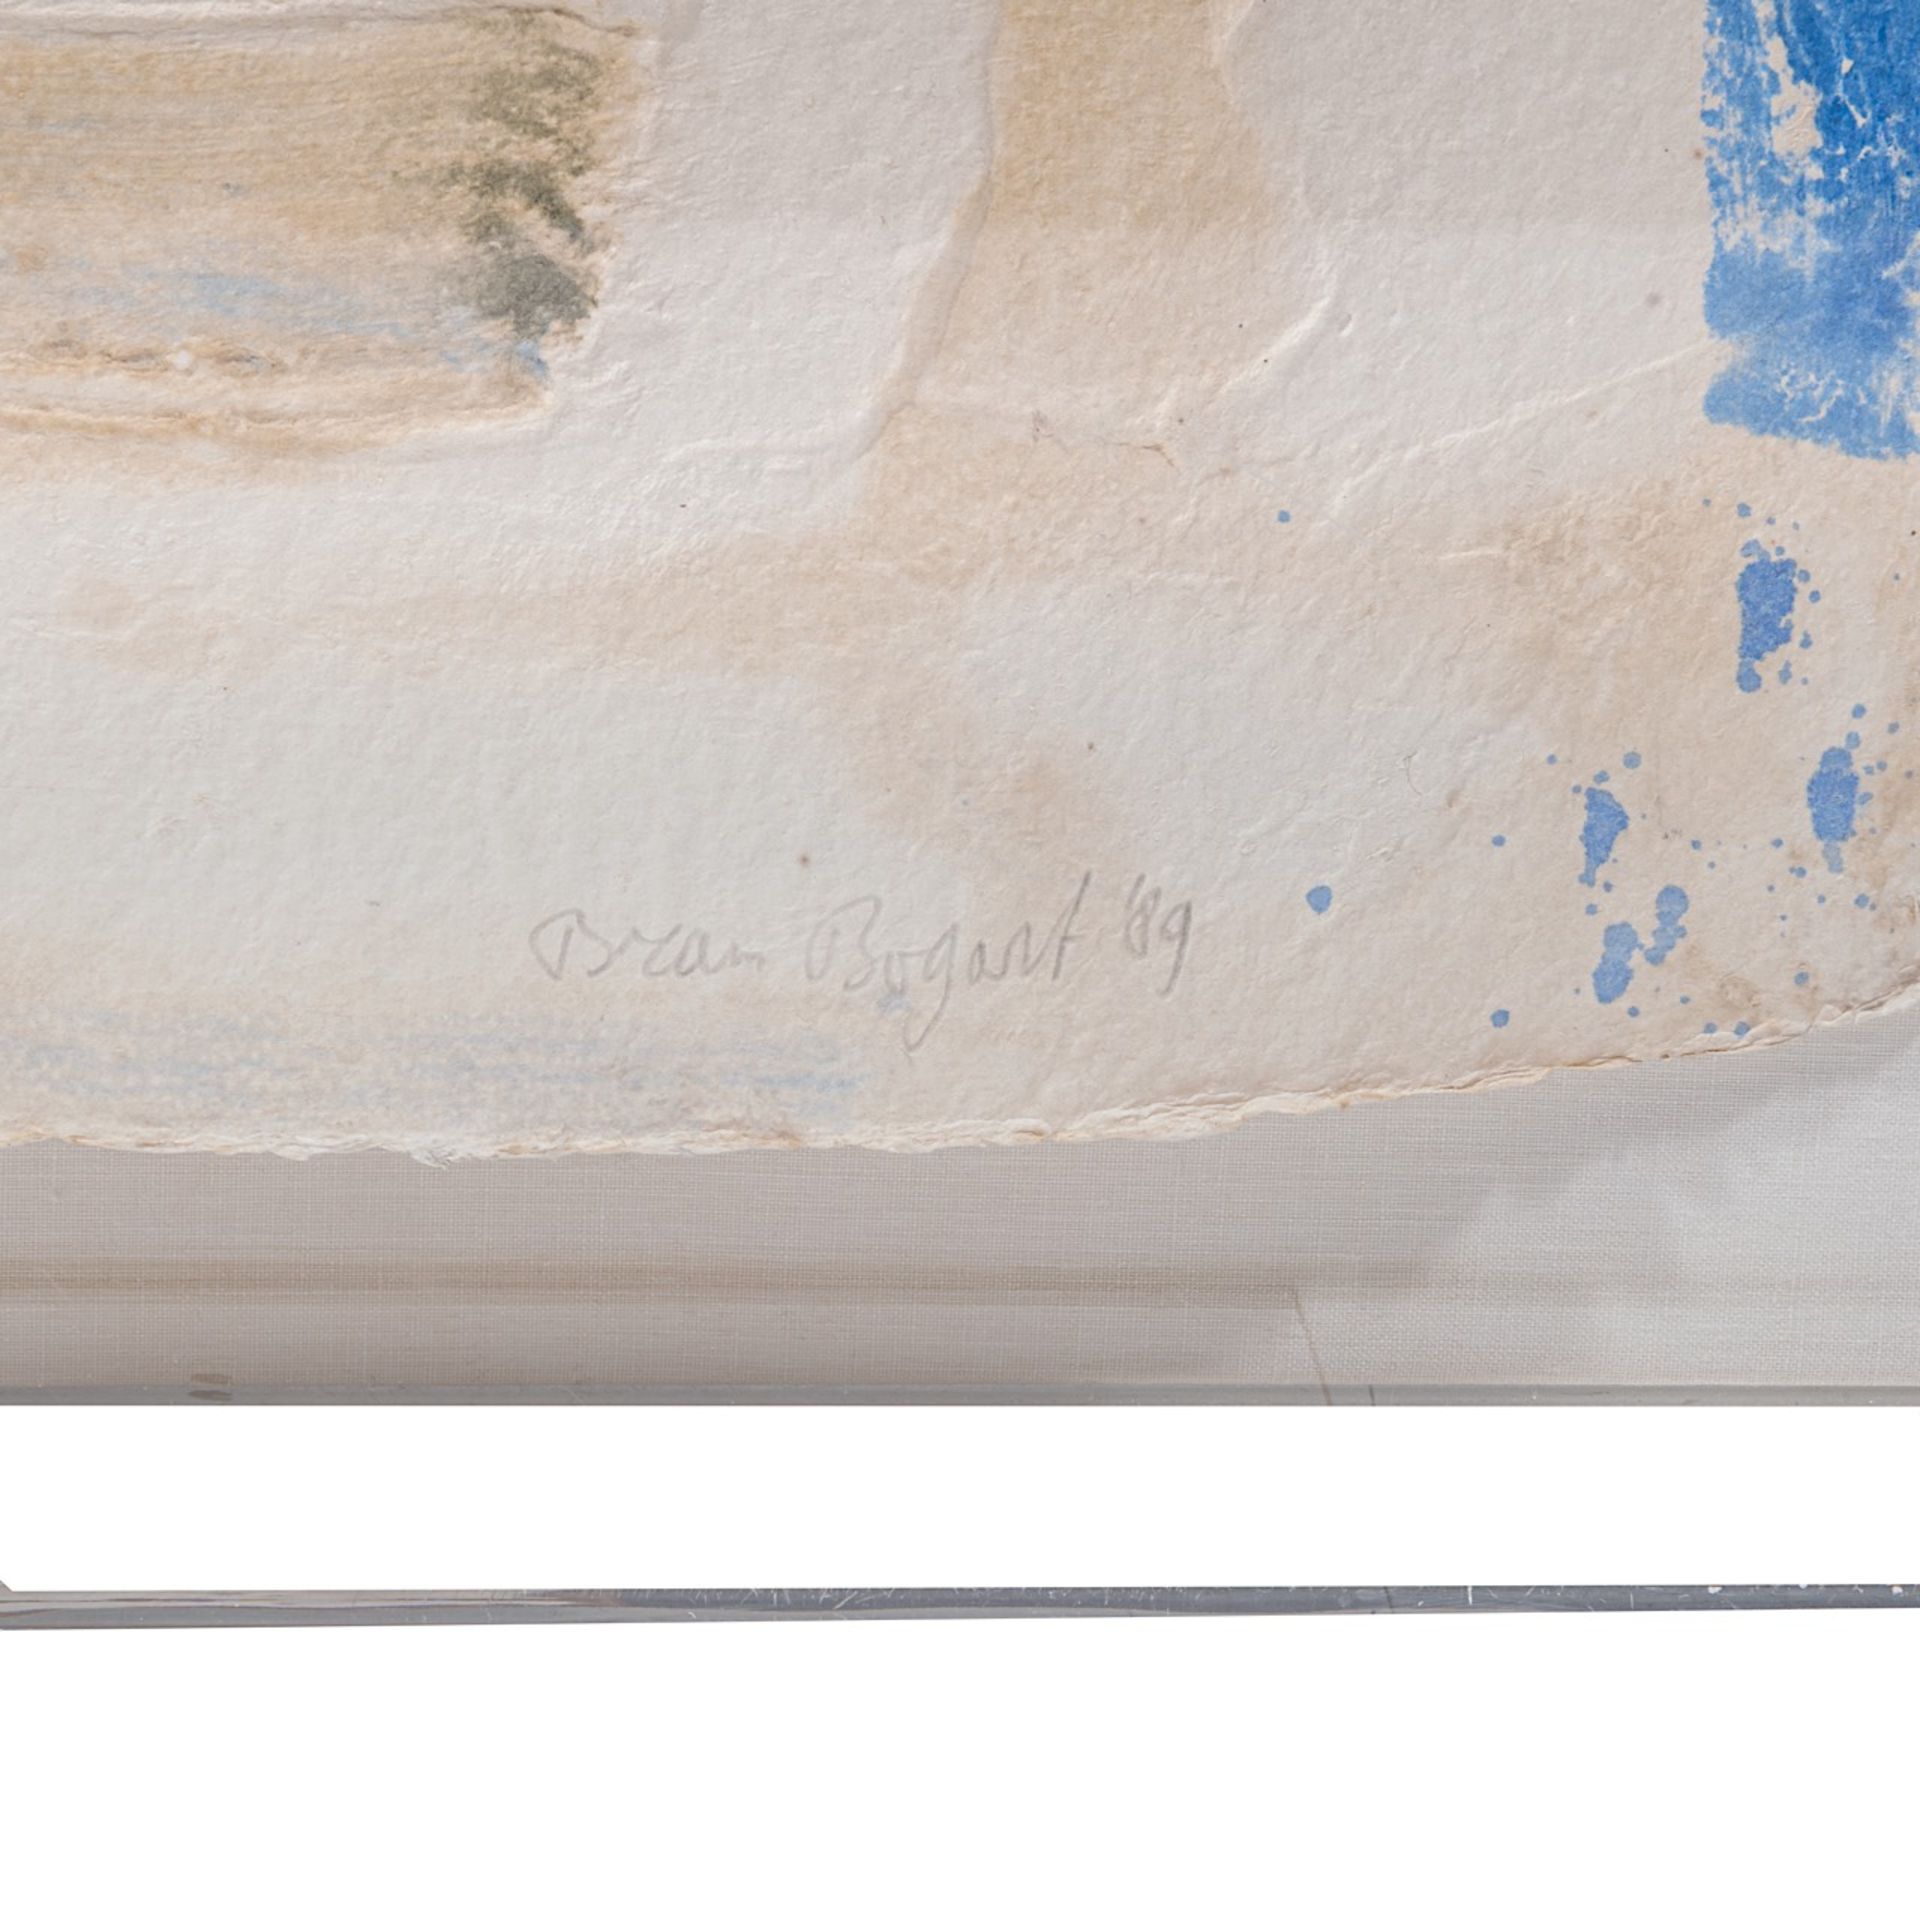 Bram Bogart (1921-2012), 'Bleu de Delft', 1989, aqua engraving, Ndeg 89/99, 110 x 80 cm. (43.3 x 31 - Image 4 of 9